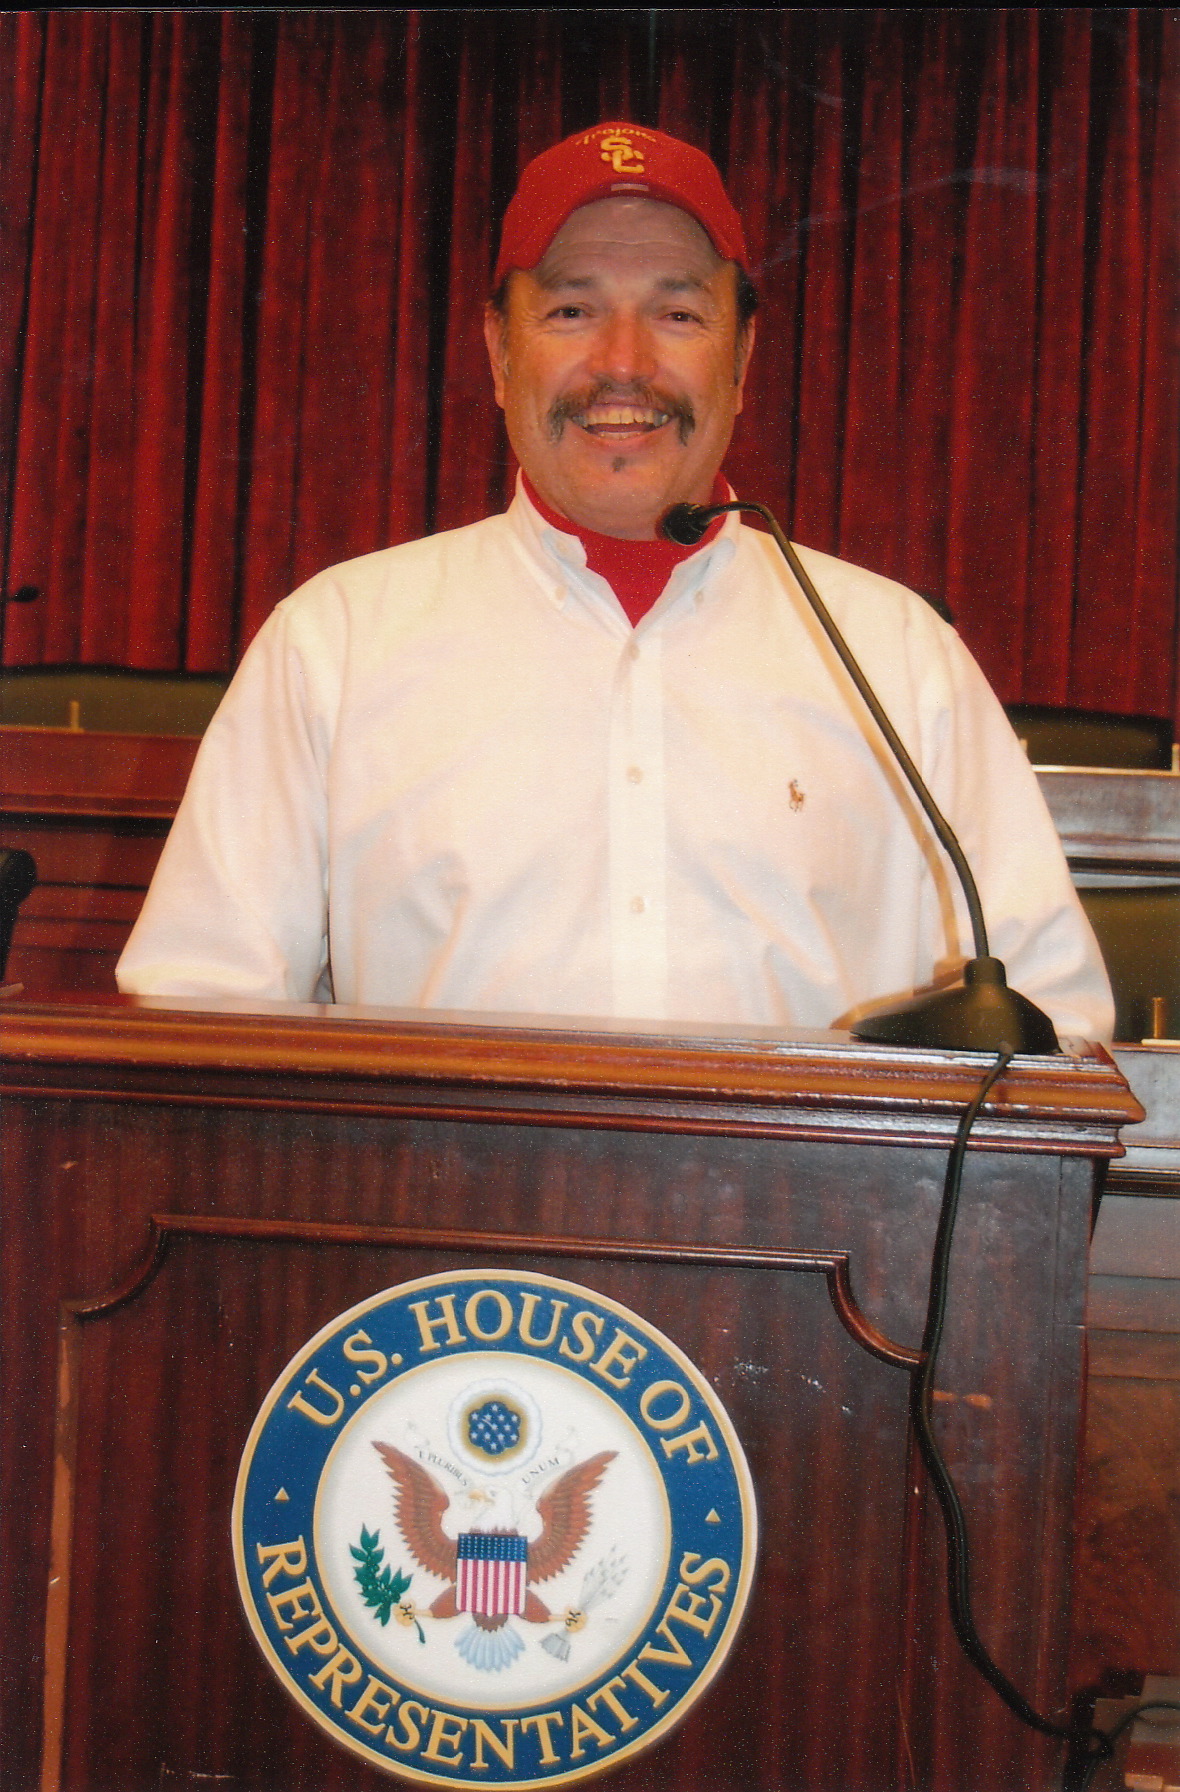 Tony in the U.S. House of Representatives